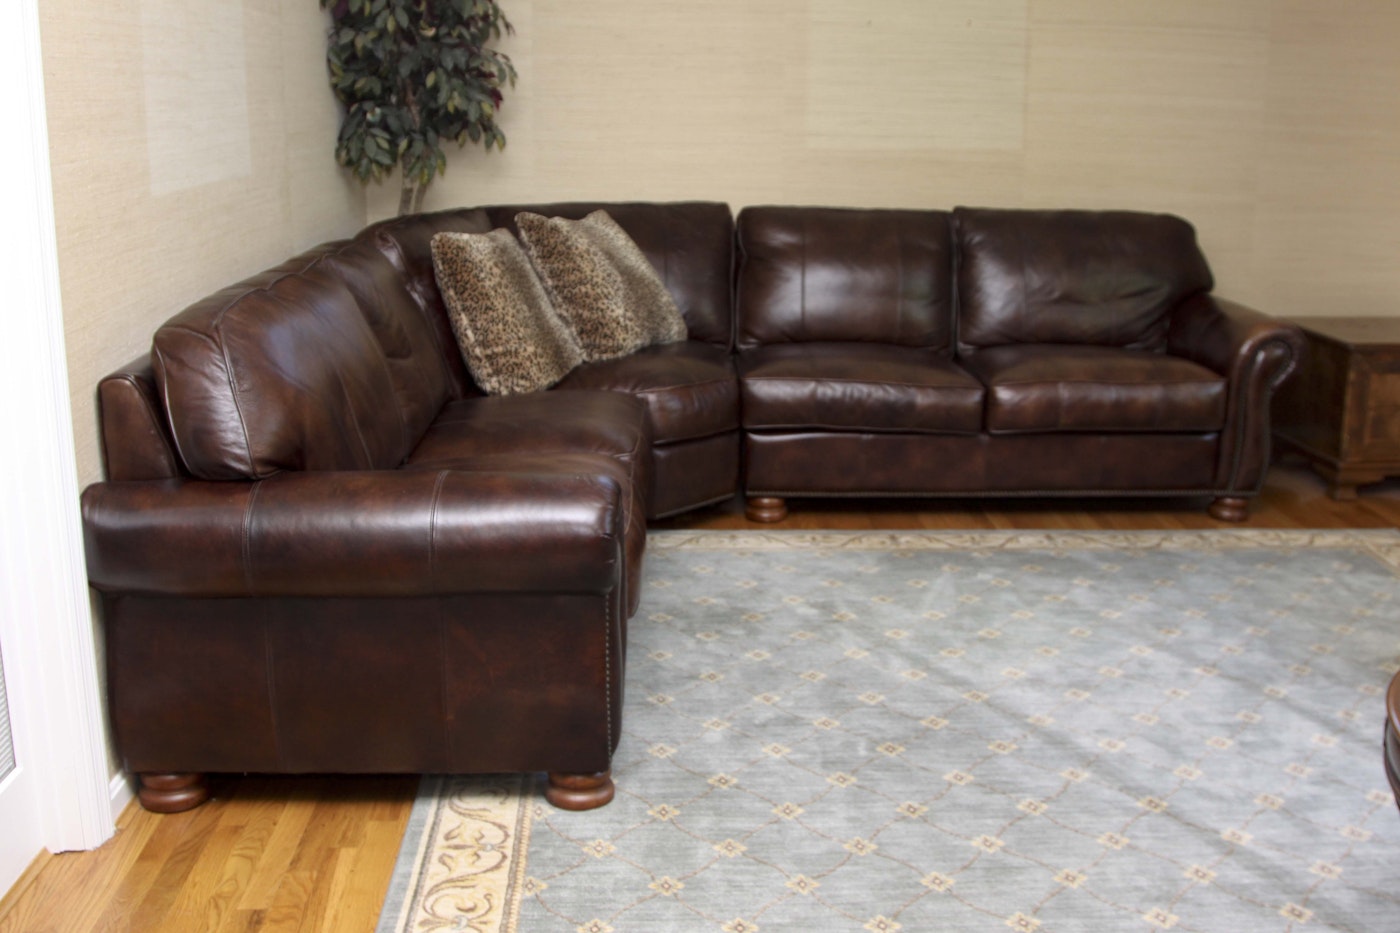 thomasville furniture leather sofa